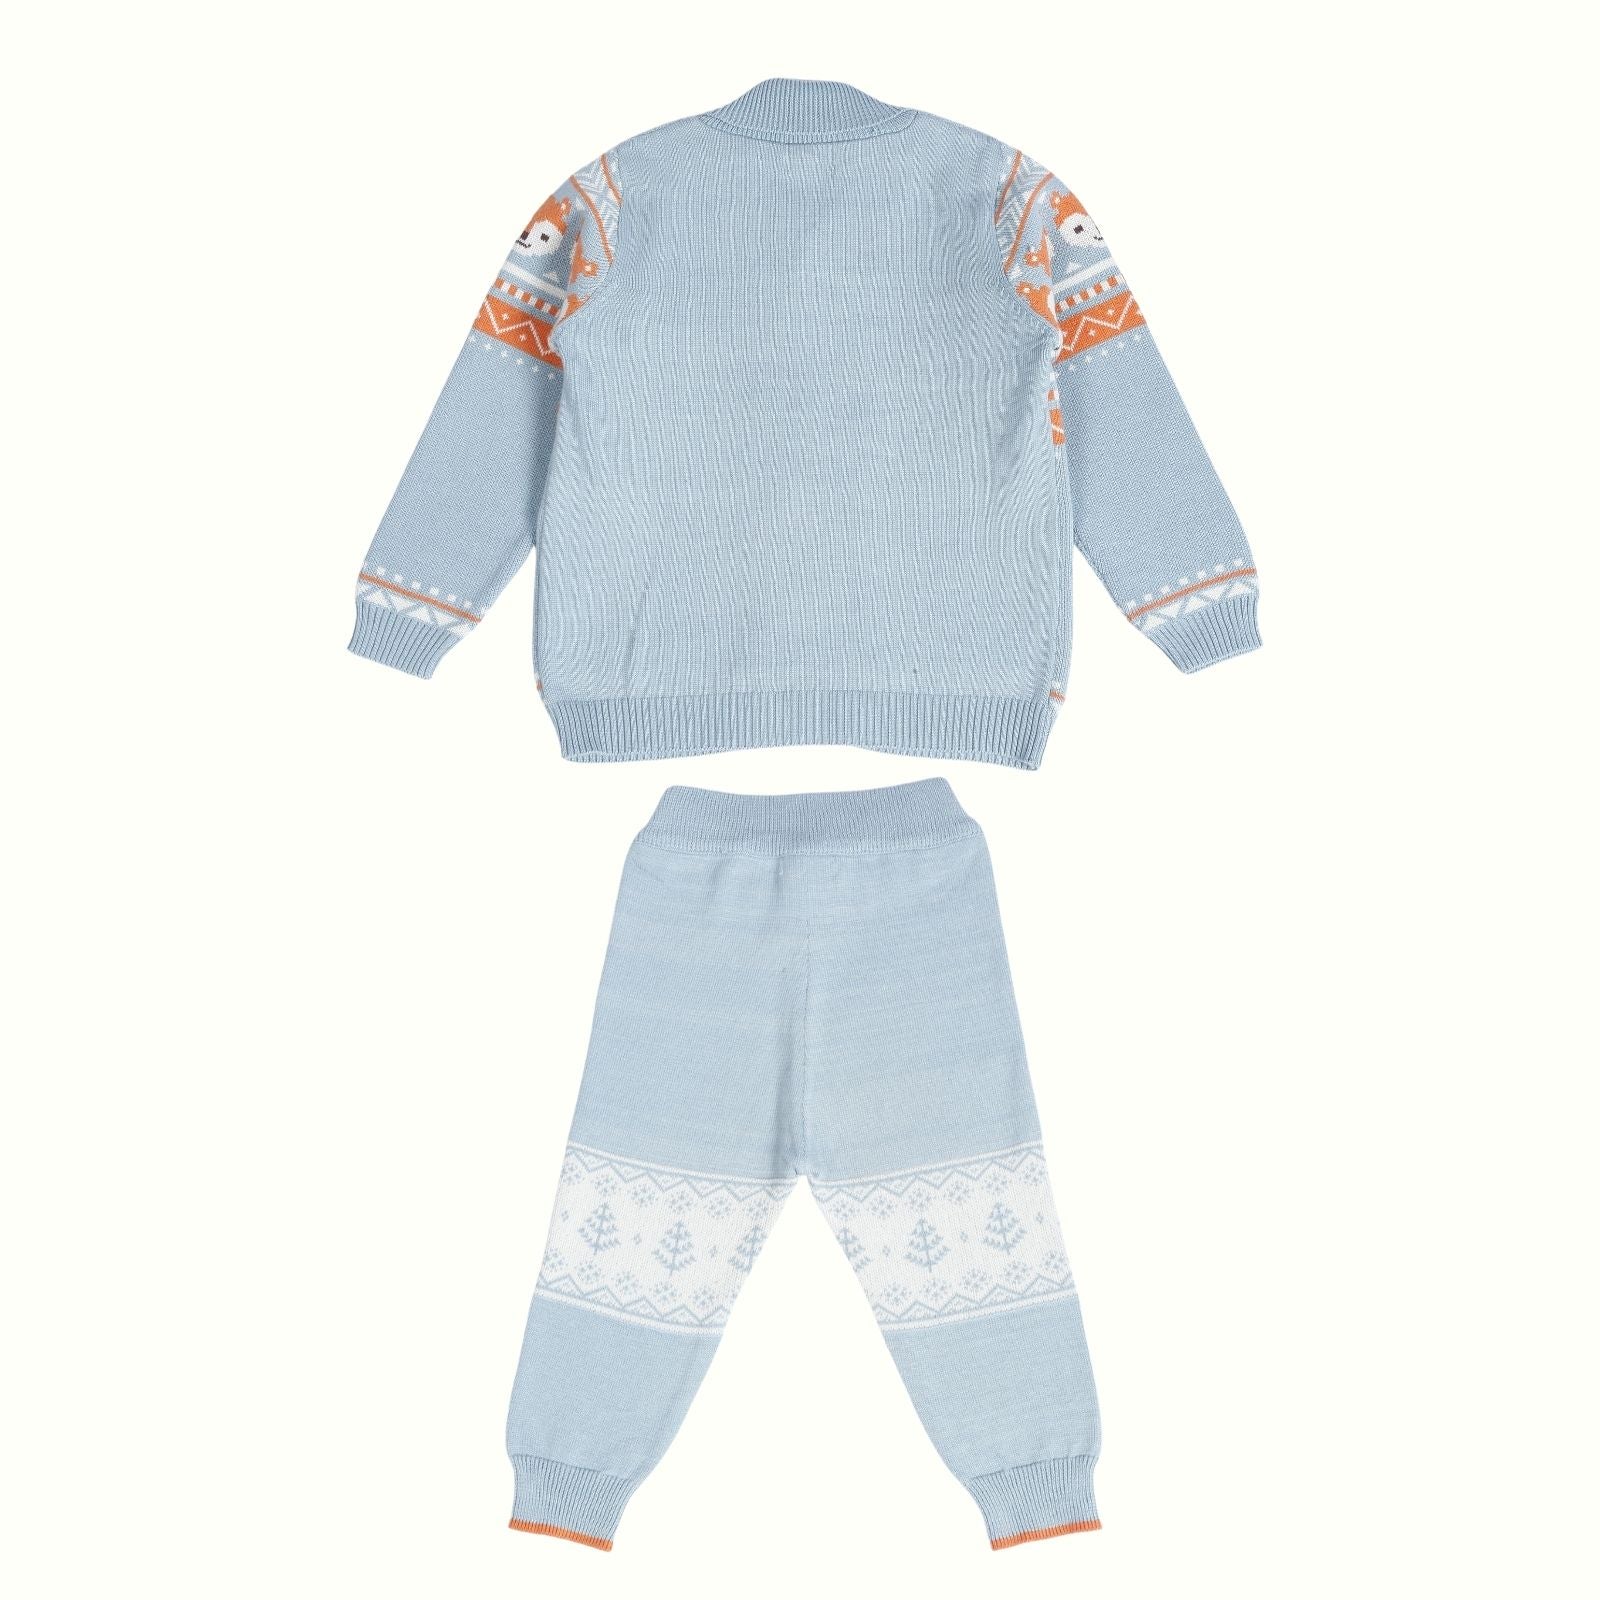 Greendeer Sunny Fox Jacquard 100% Cotton Sweater with Lower - Powder Blue & Orange - Set of 2